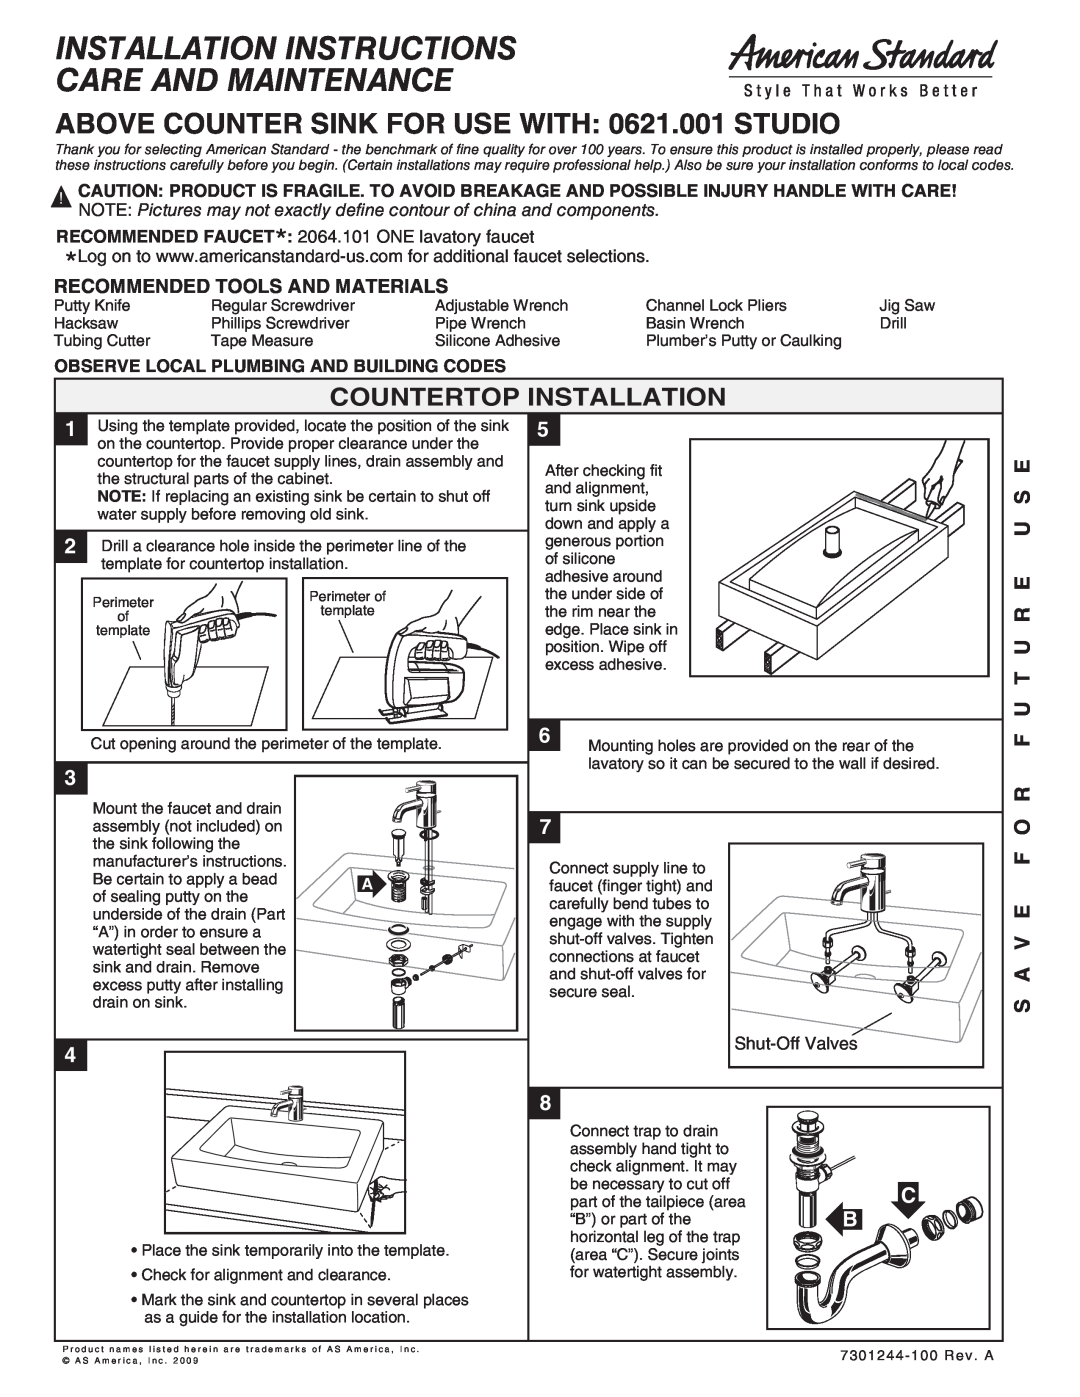 American Standard 621.001 installation instructions Countertop Installation 